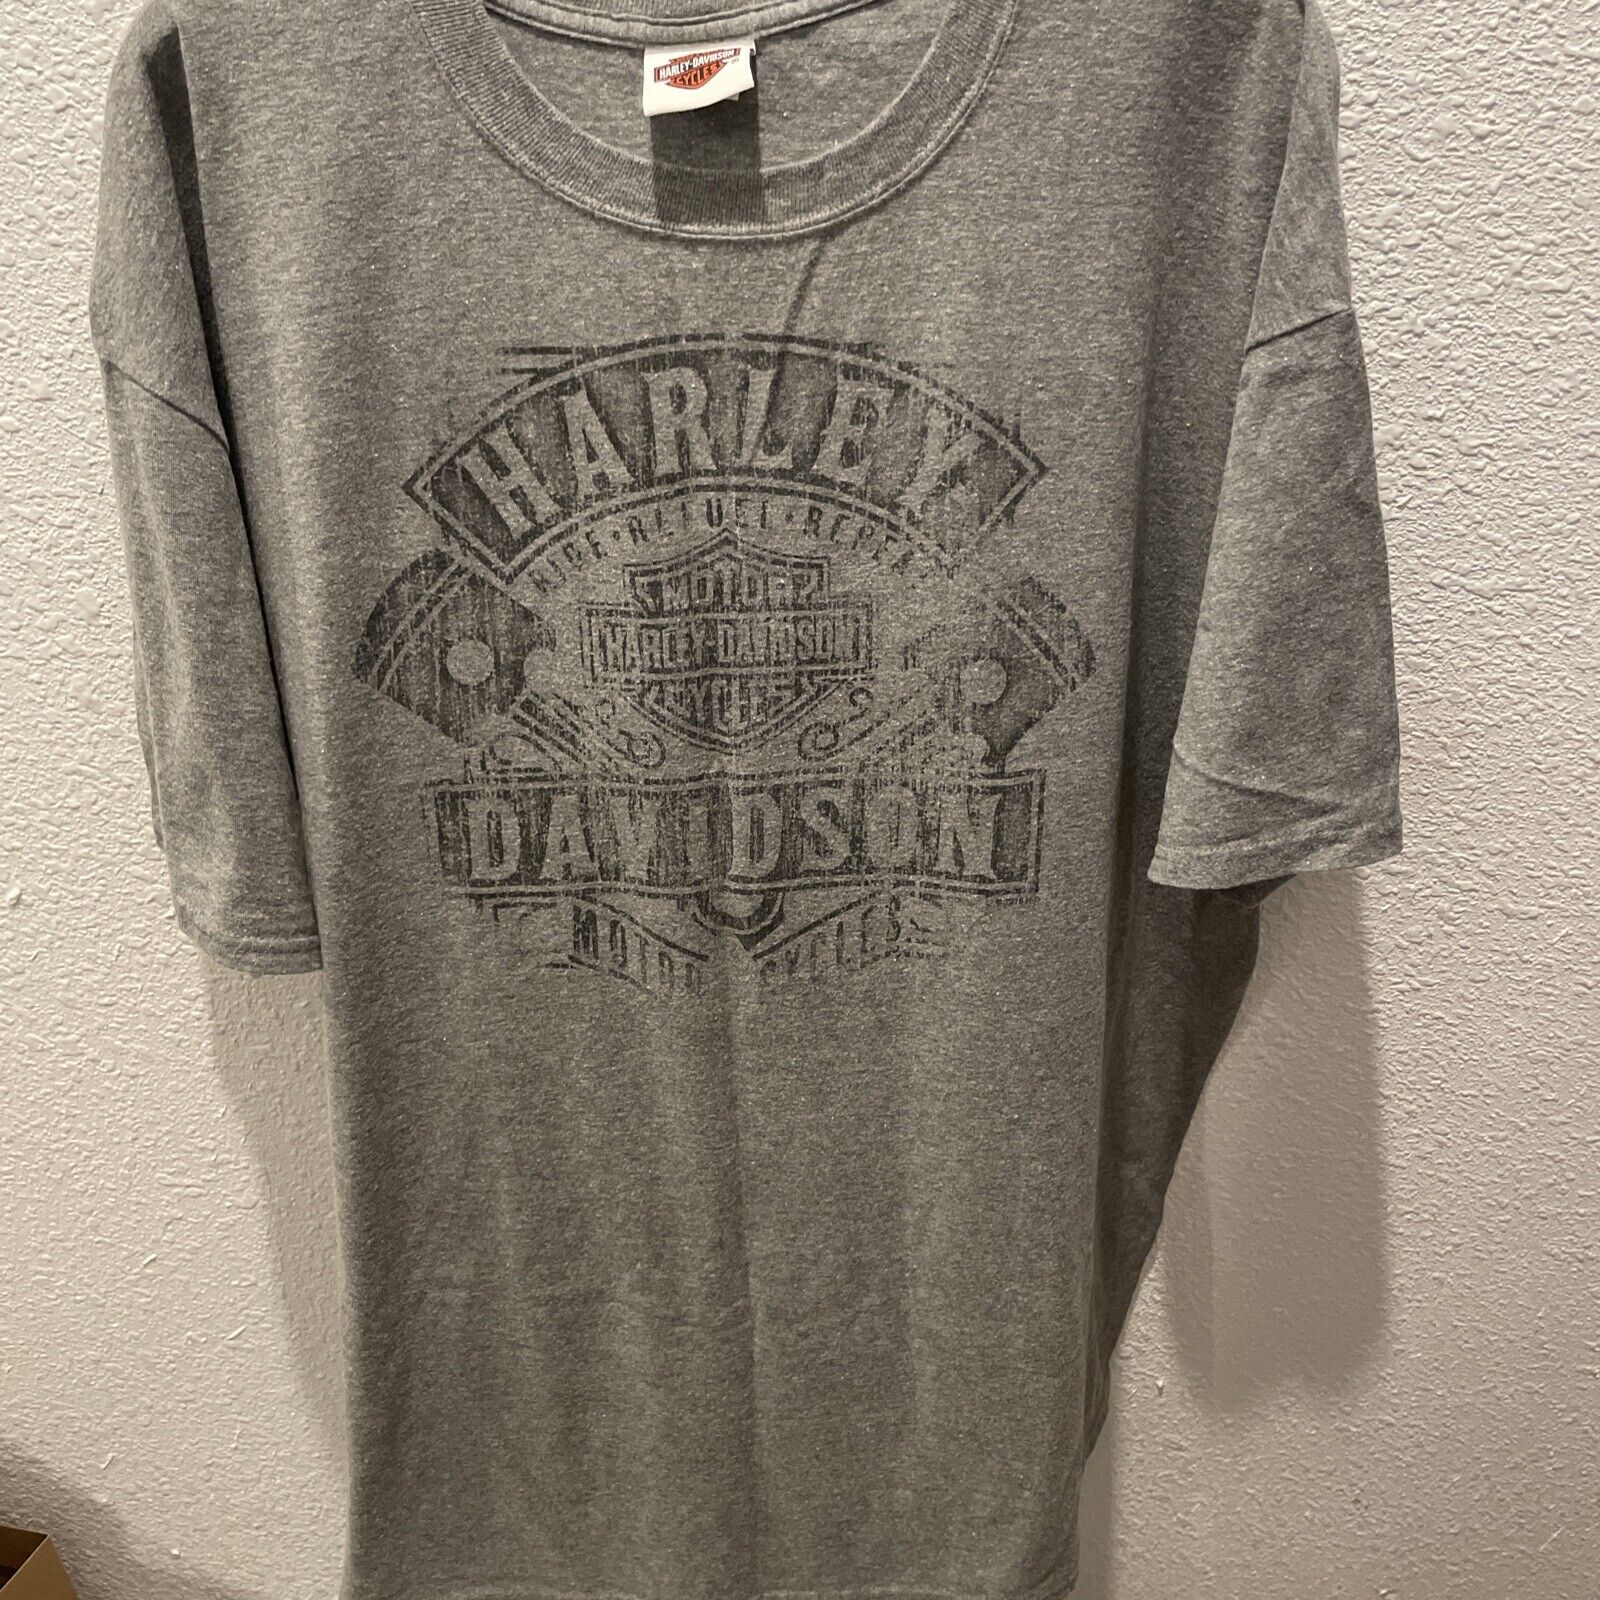 Men’s Harley Davidson Vintage Look Tshirt  (E20)